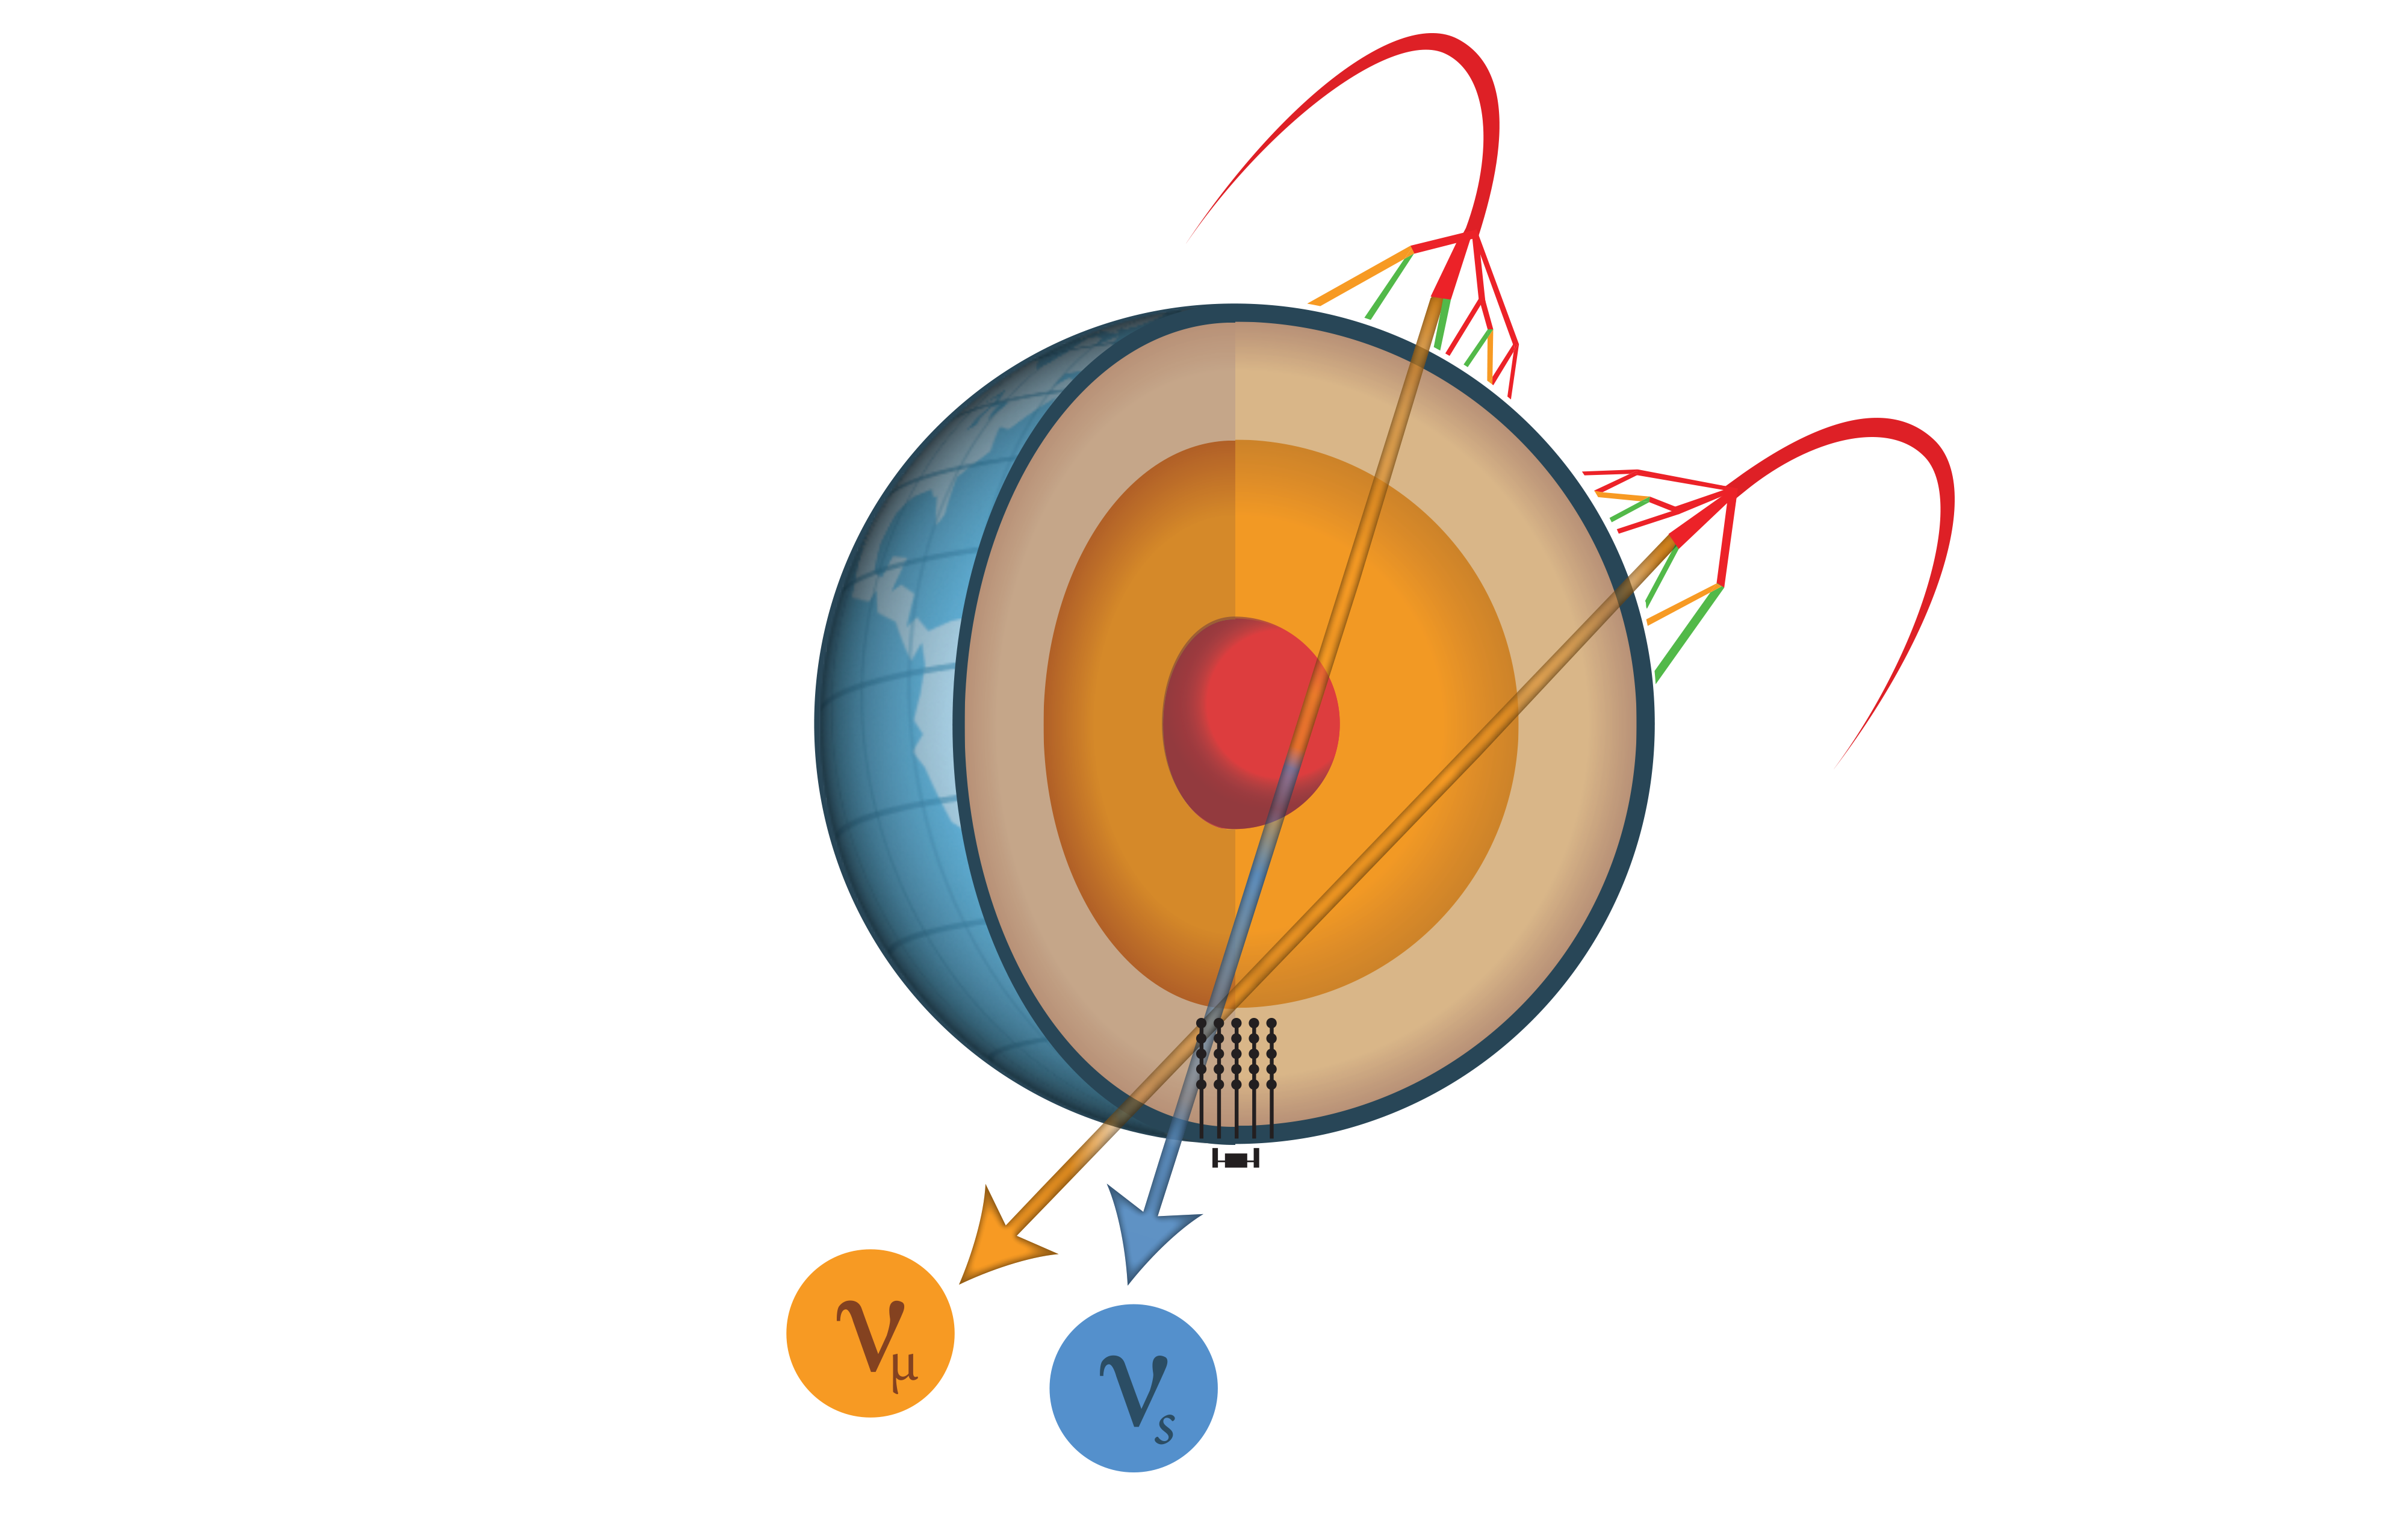 Sterile neutrinos through Earth&#039;s core